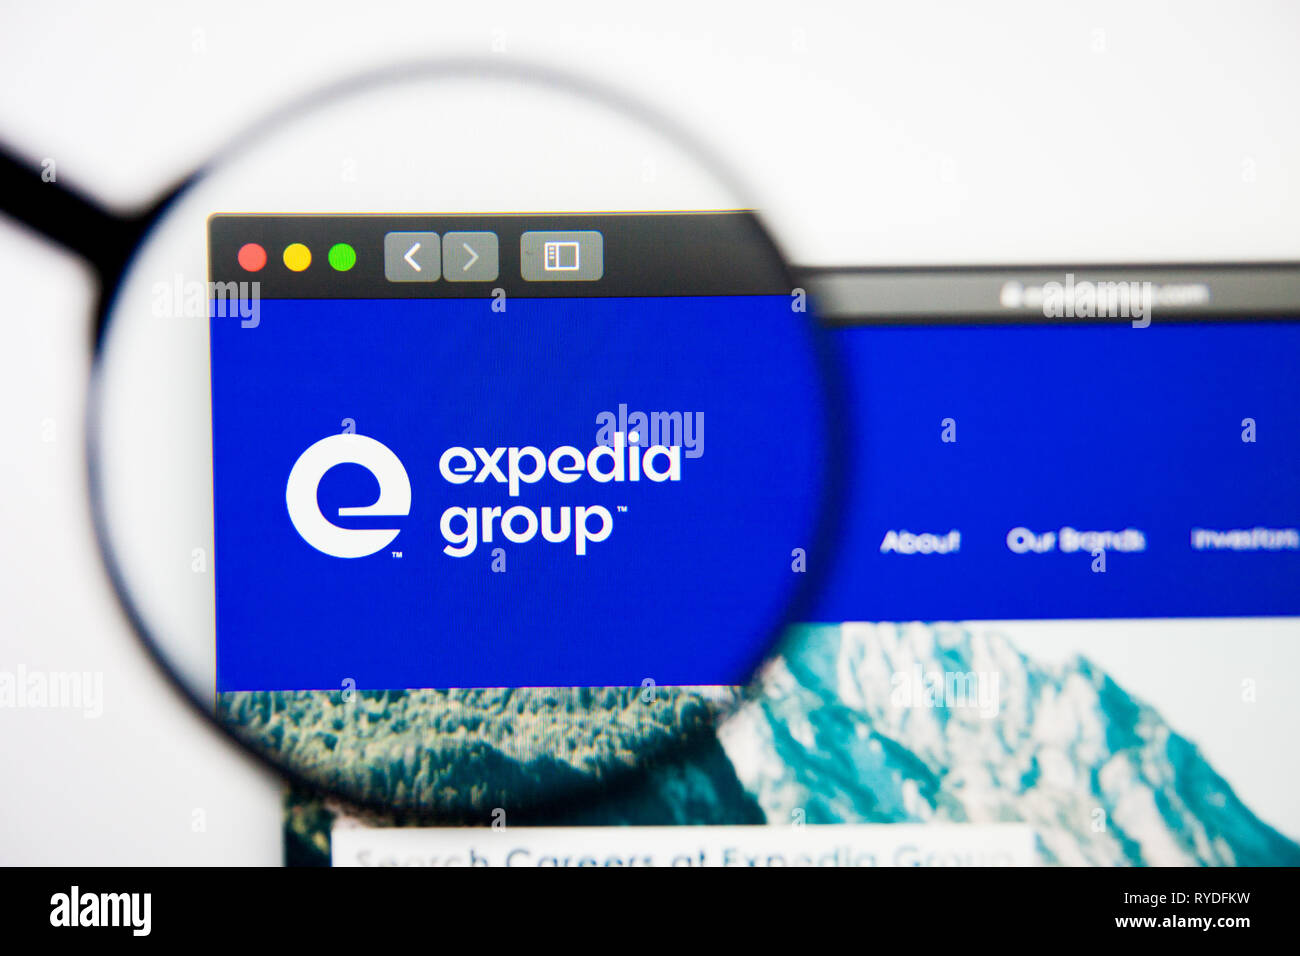 Los Angeles, Kalifornien, USA - 28. Februar 2019: Expedia Group Website Homepage. Expedia Gruppe Logo sichtbar auf dem Display, Illustrative Editorial Stockfoto